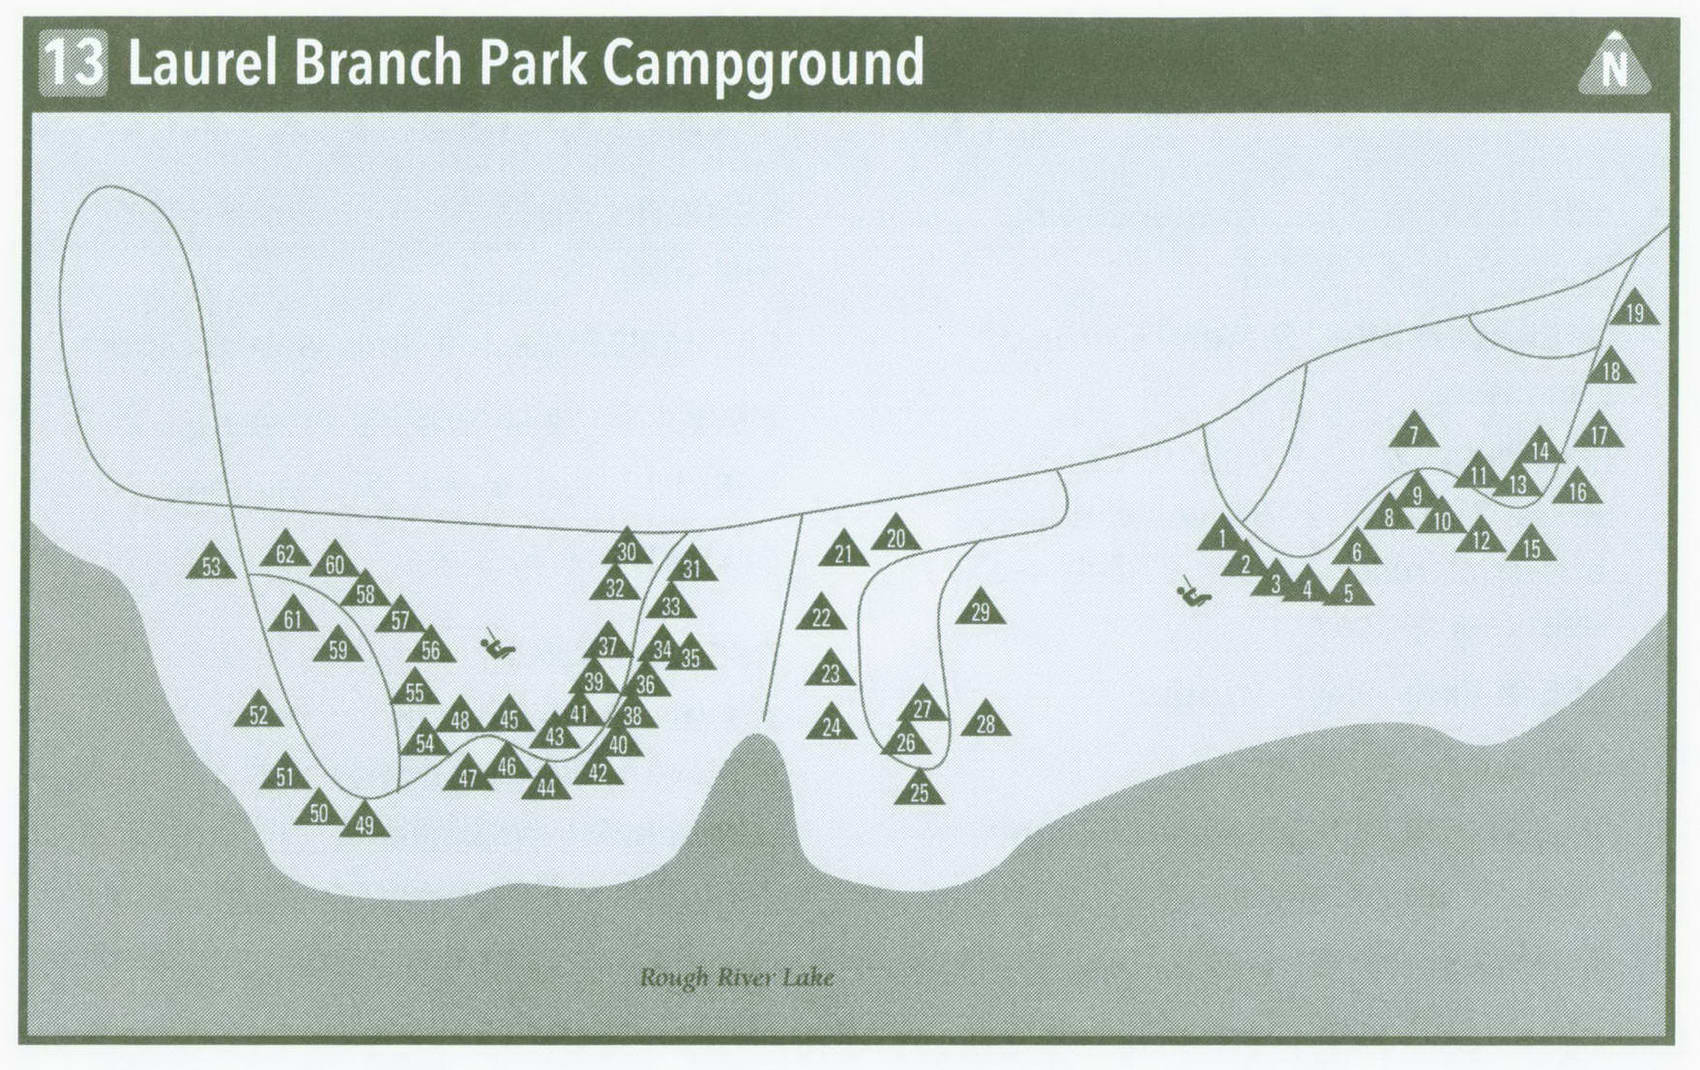 Plan of Laurel Branch Park Campground